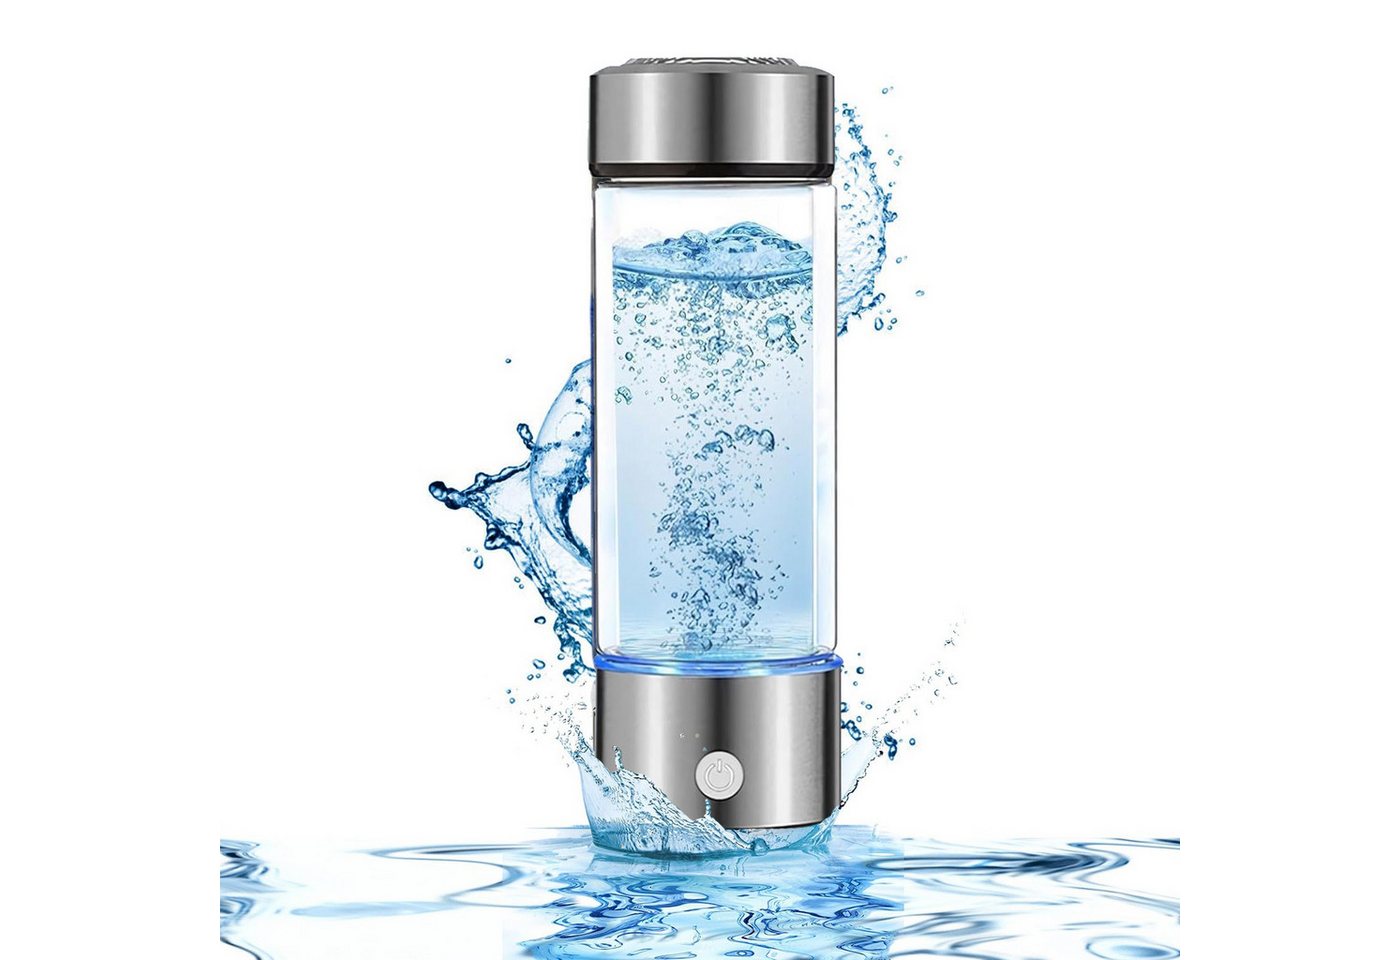 PFCTART Trinkflasche Wasserstoff Wasser Flasche, wasserstoffreiche Wasser Glas Gesundheit Tasse von PFCTART